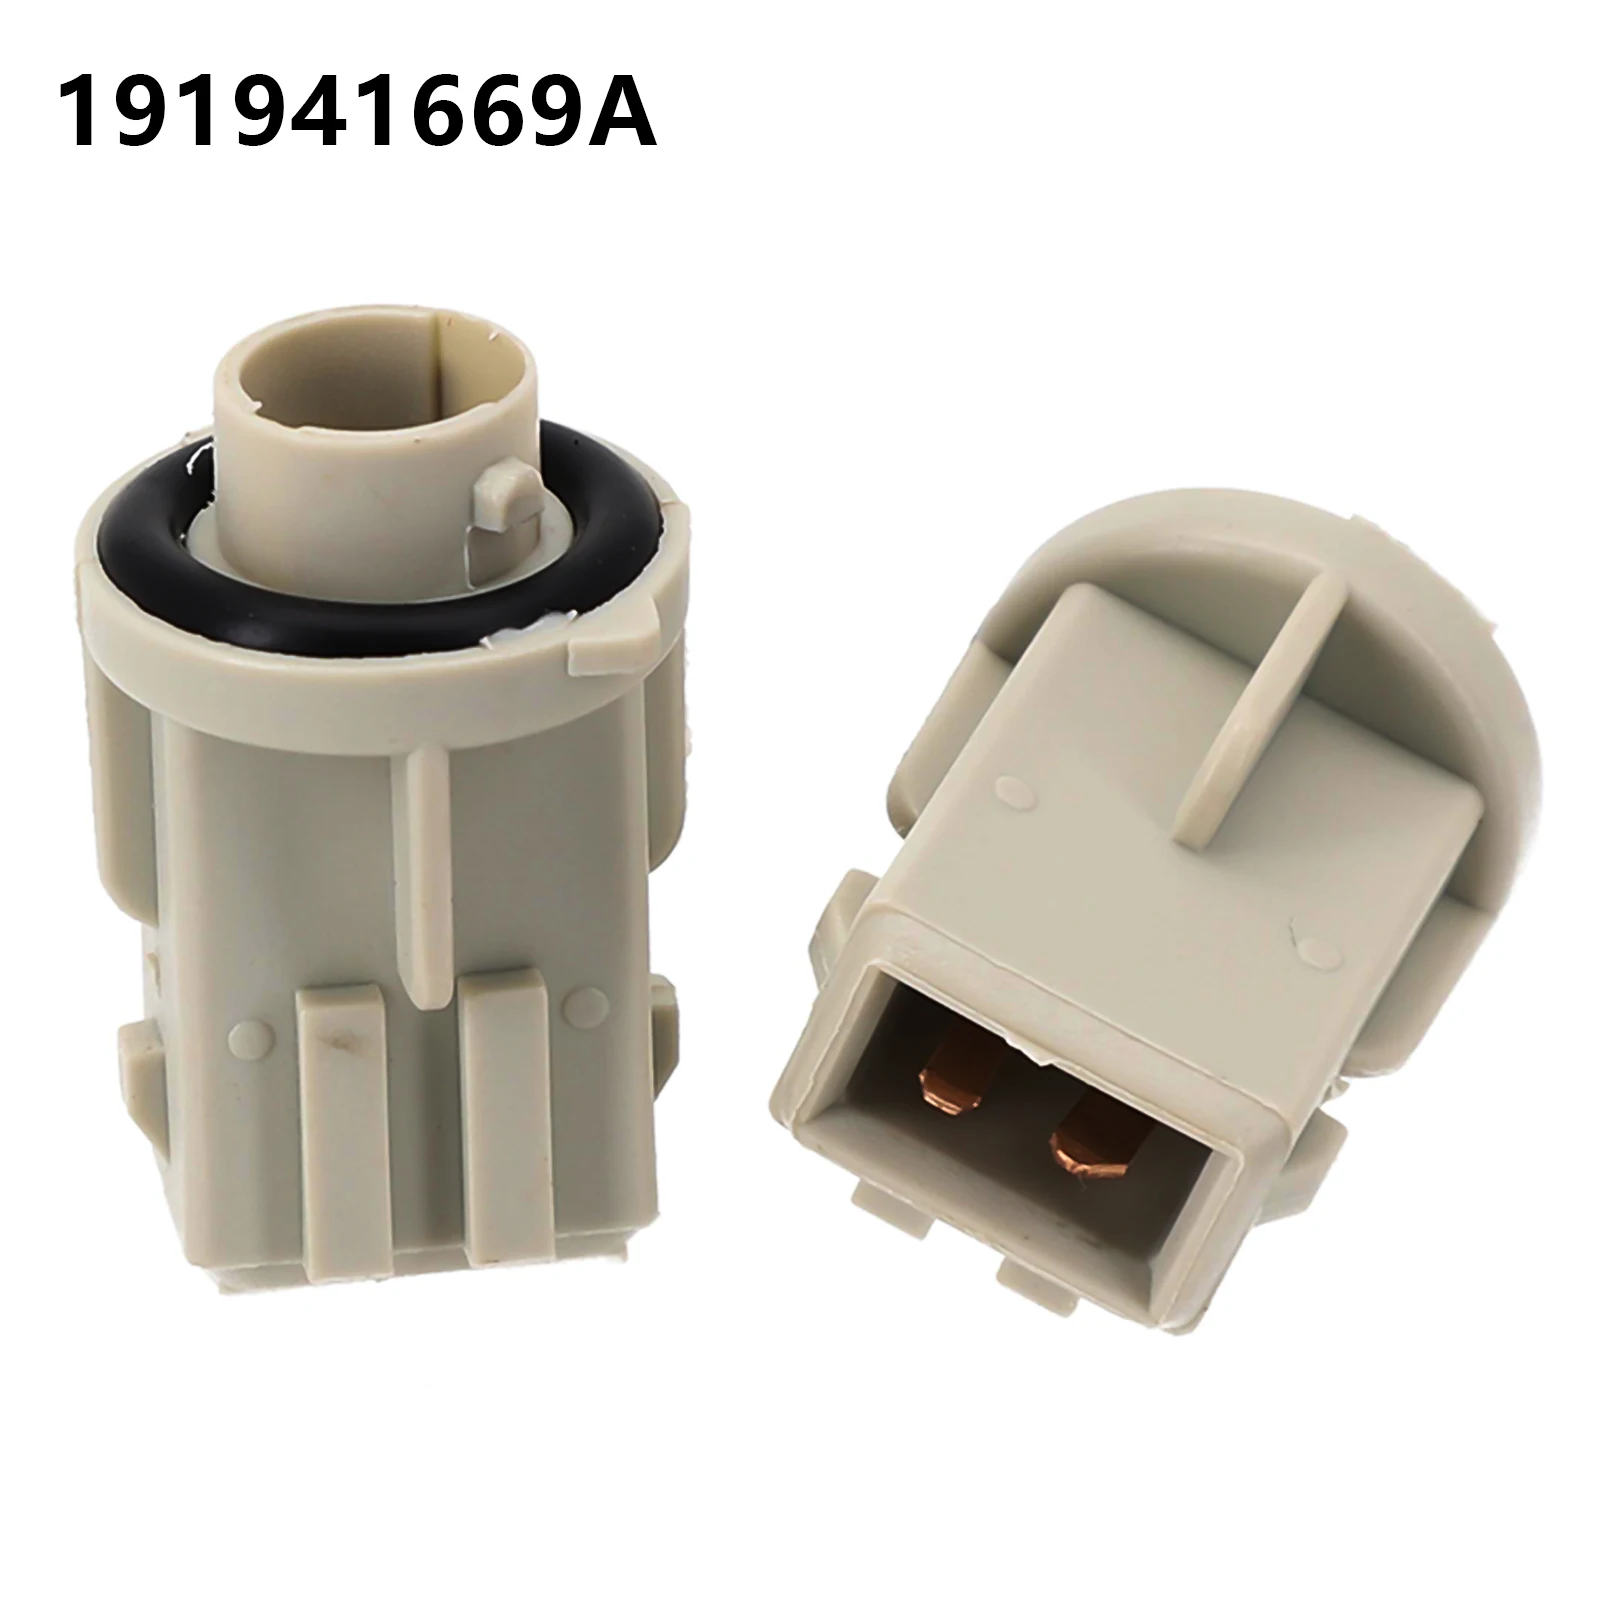 

2pcs Side Lamp Light Bulb Holders 191941669A For VW T4 Transporter 1990 To 2003 Bulb Holder Base Socket Accessories